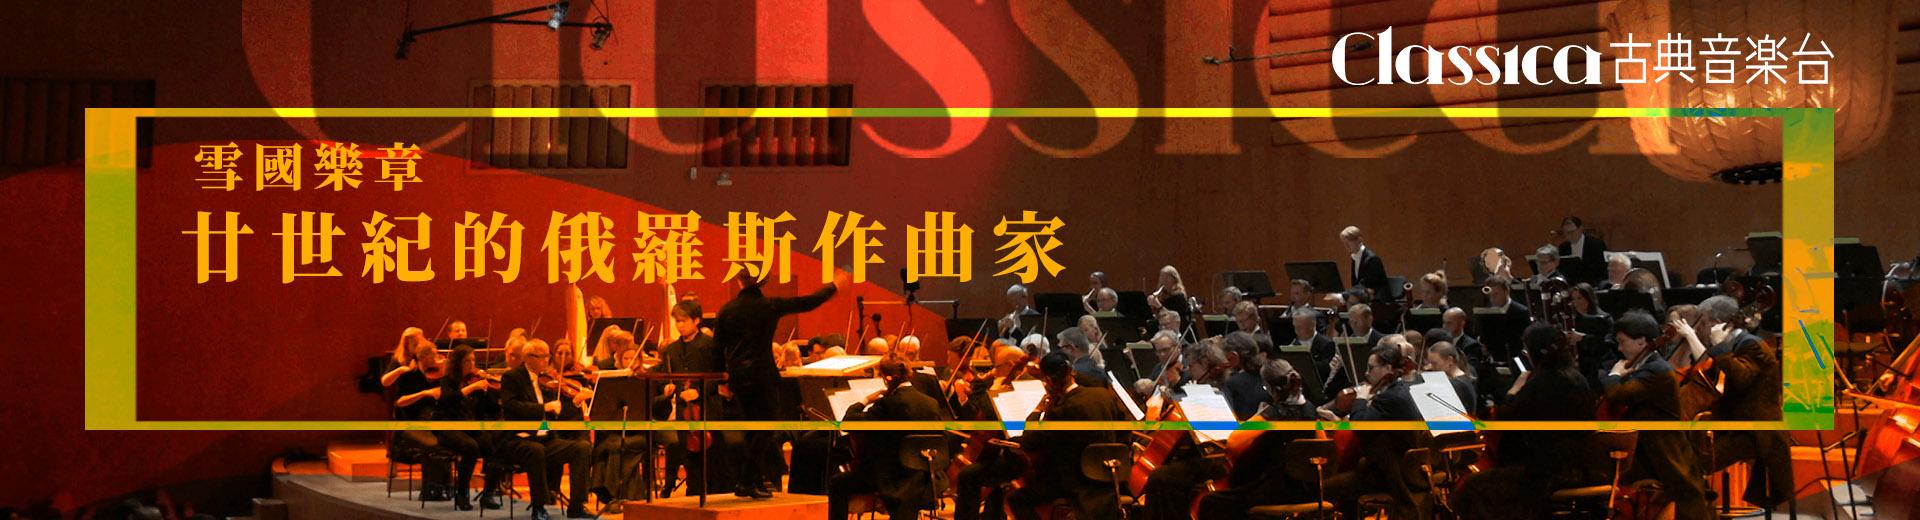 CLASSICA古典音樂台 2021年11月推薦節目